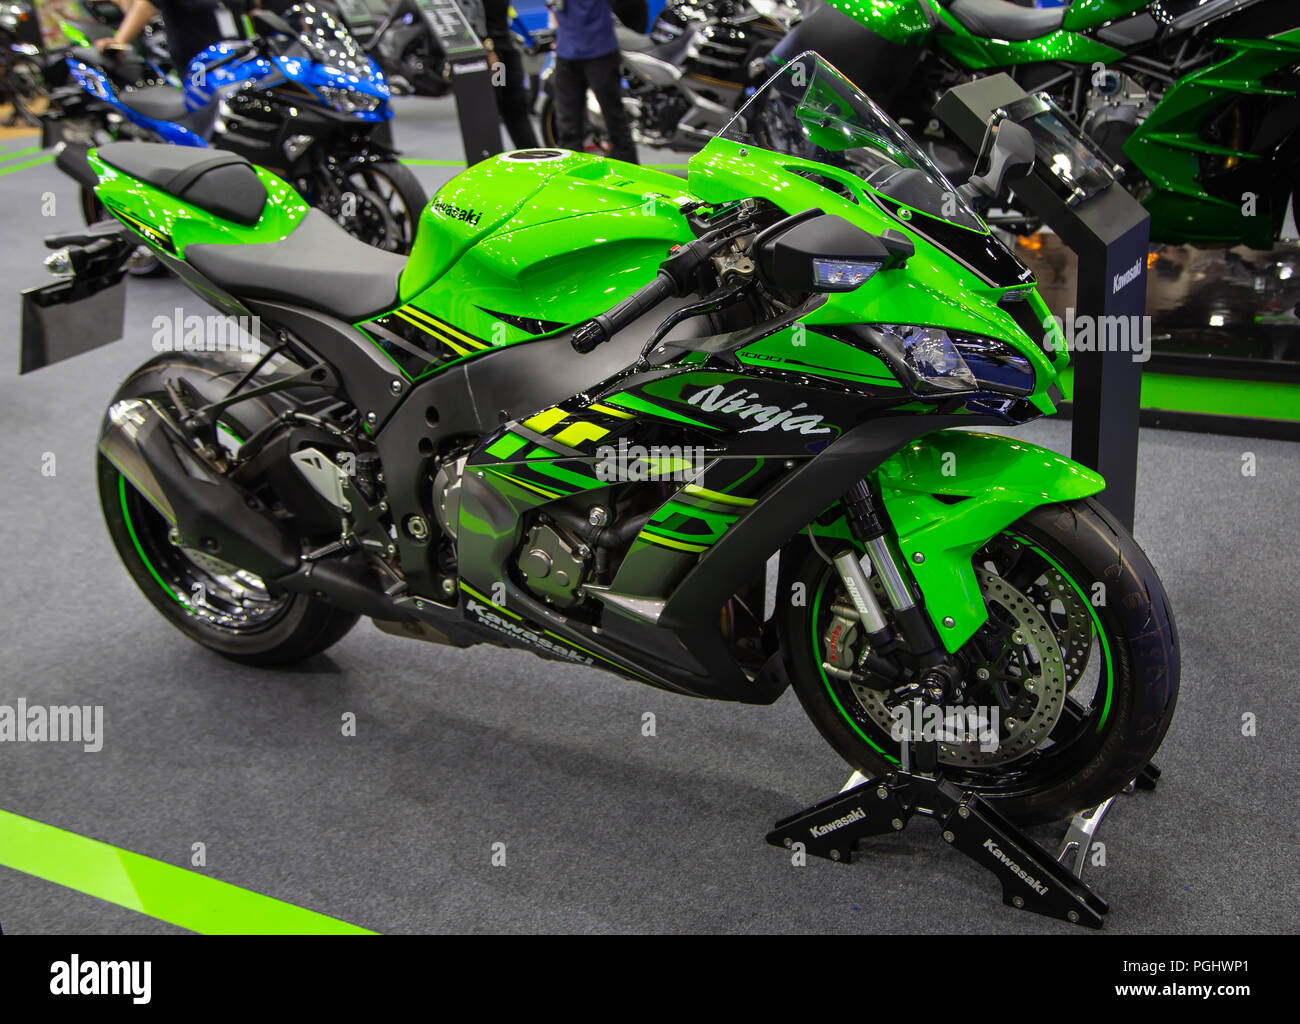 https://c8.alamy.com/comp/PGHWP1/bangkok-thailand-august-22-2018-kawasaki-ninja-1000-superbike-presented-in-big-motor-sale-2018-PGHWP1.jpg